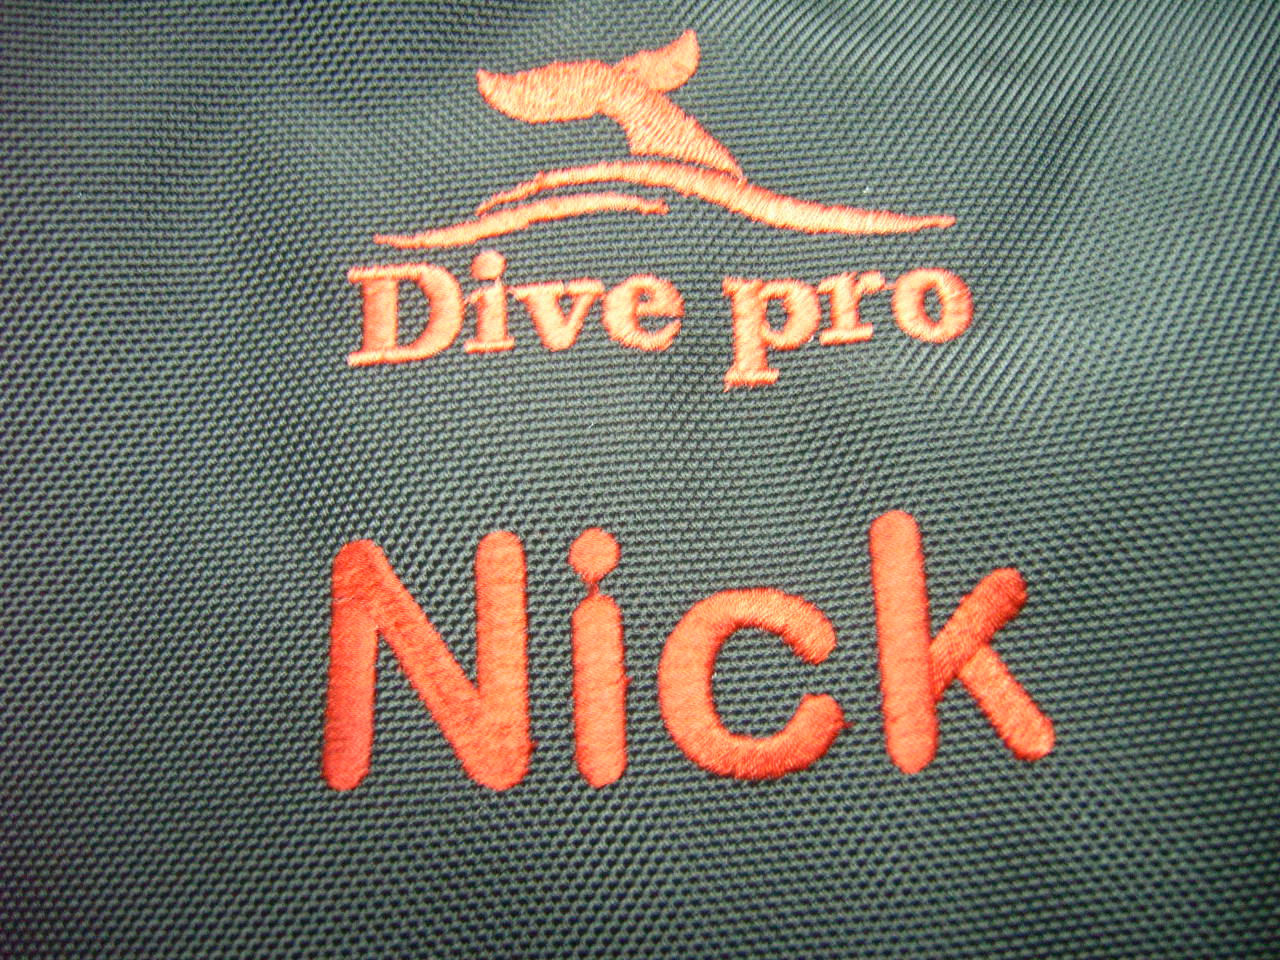 Dive Pro Sidemountjacket "Explorer" individuell mit deinem Namen bestickt